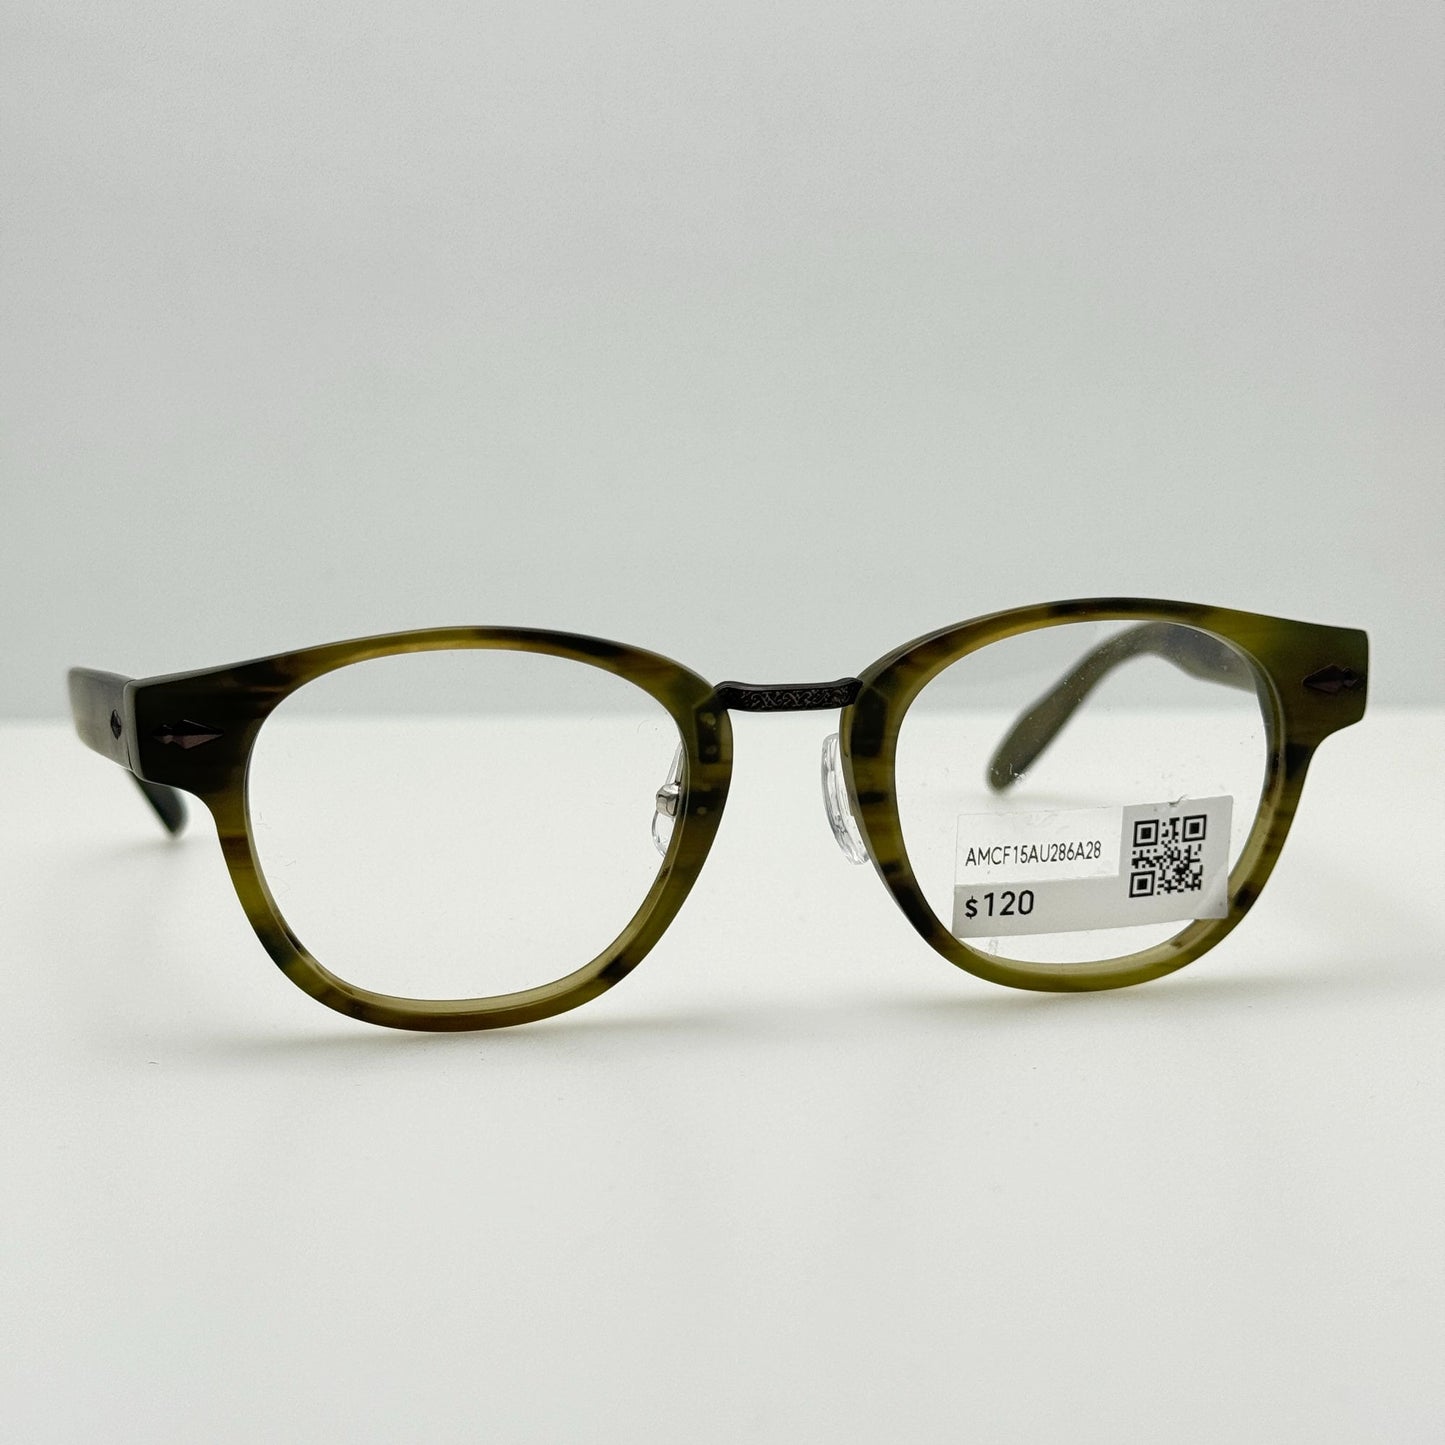 Jins Eyeglasses Eye Glasses Frames MCF-15A-U286A 28 46-21-150 39